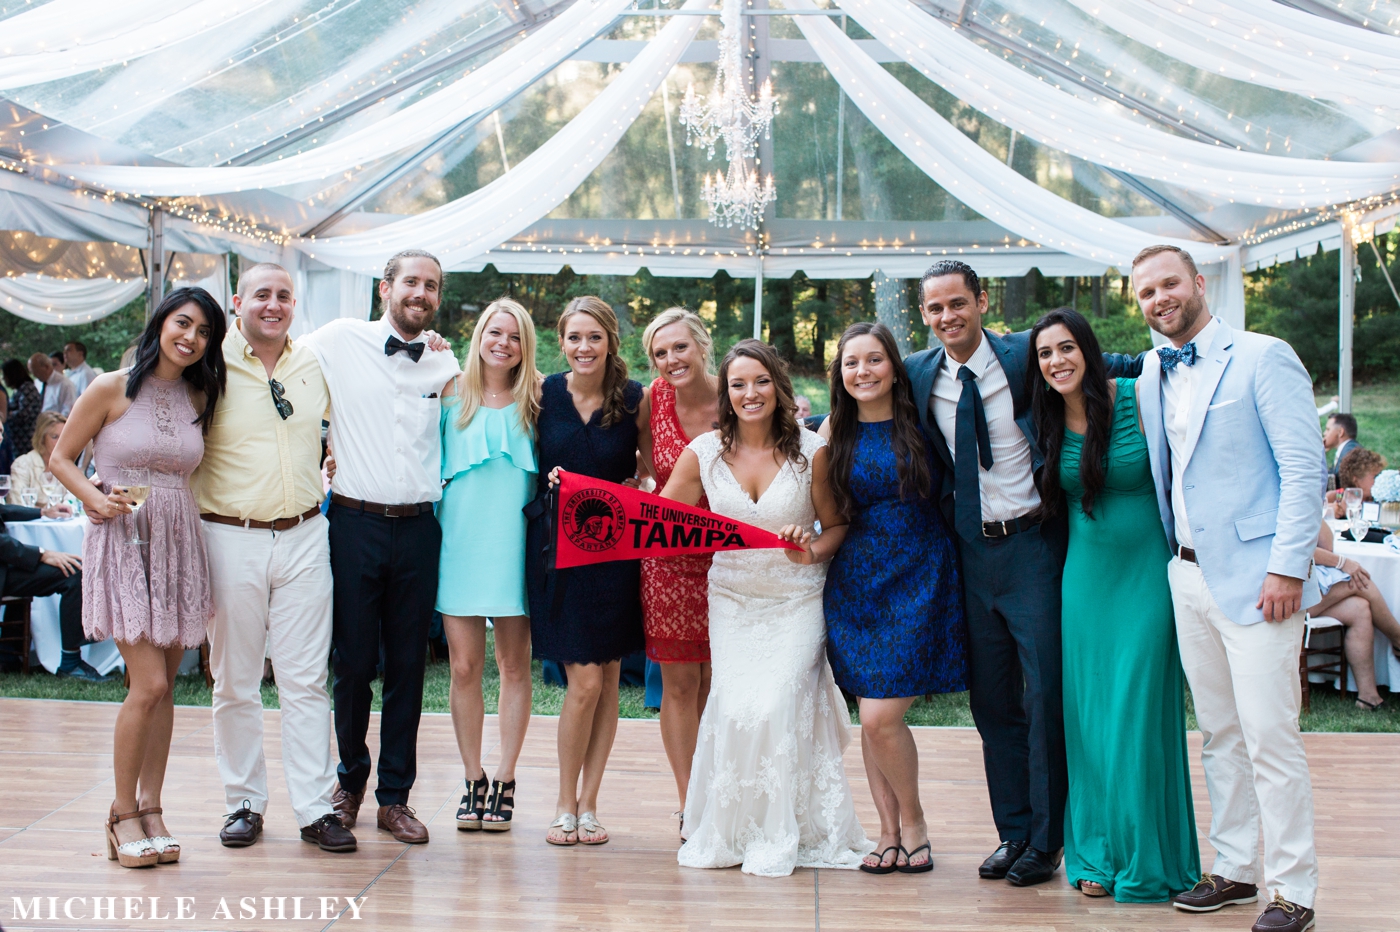 Paris Inspired Wedding | Liz + Alex | Backyard Wedding | Michele Ashley Photography